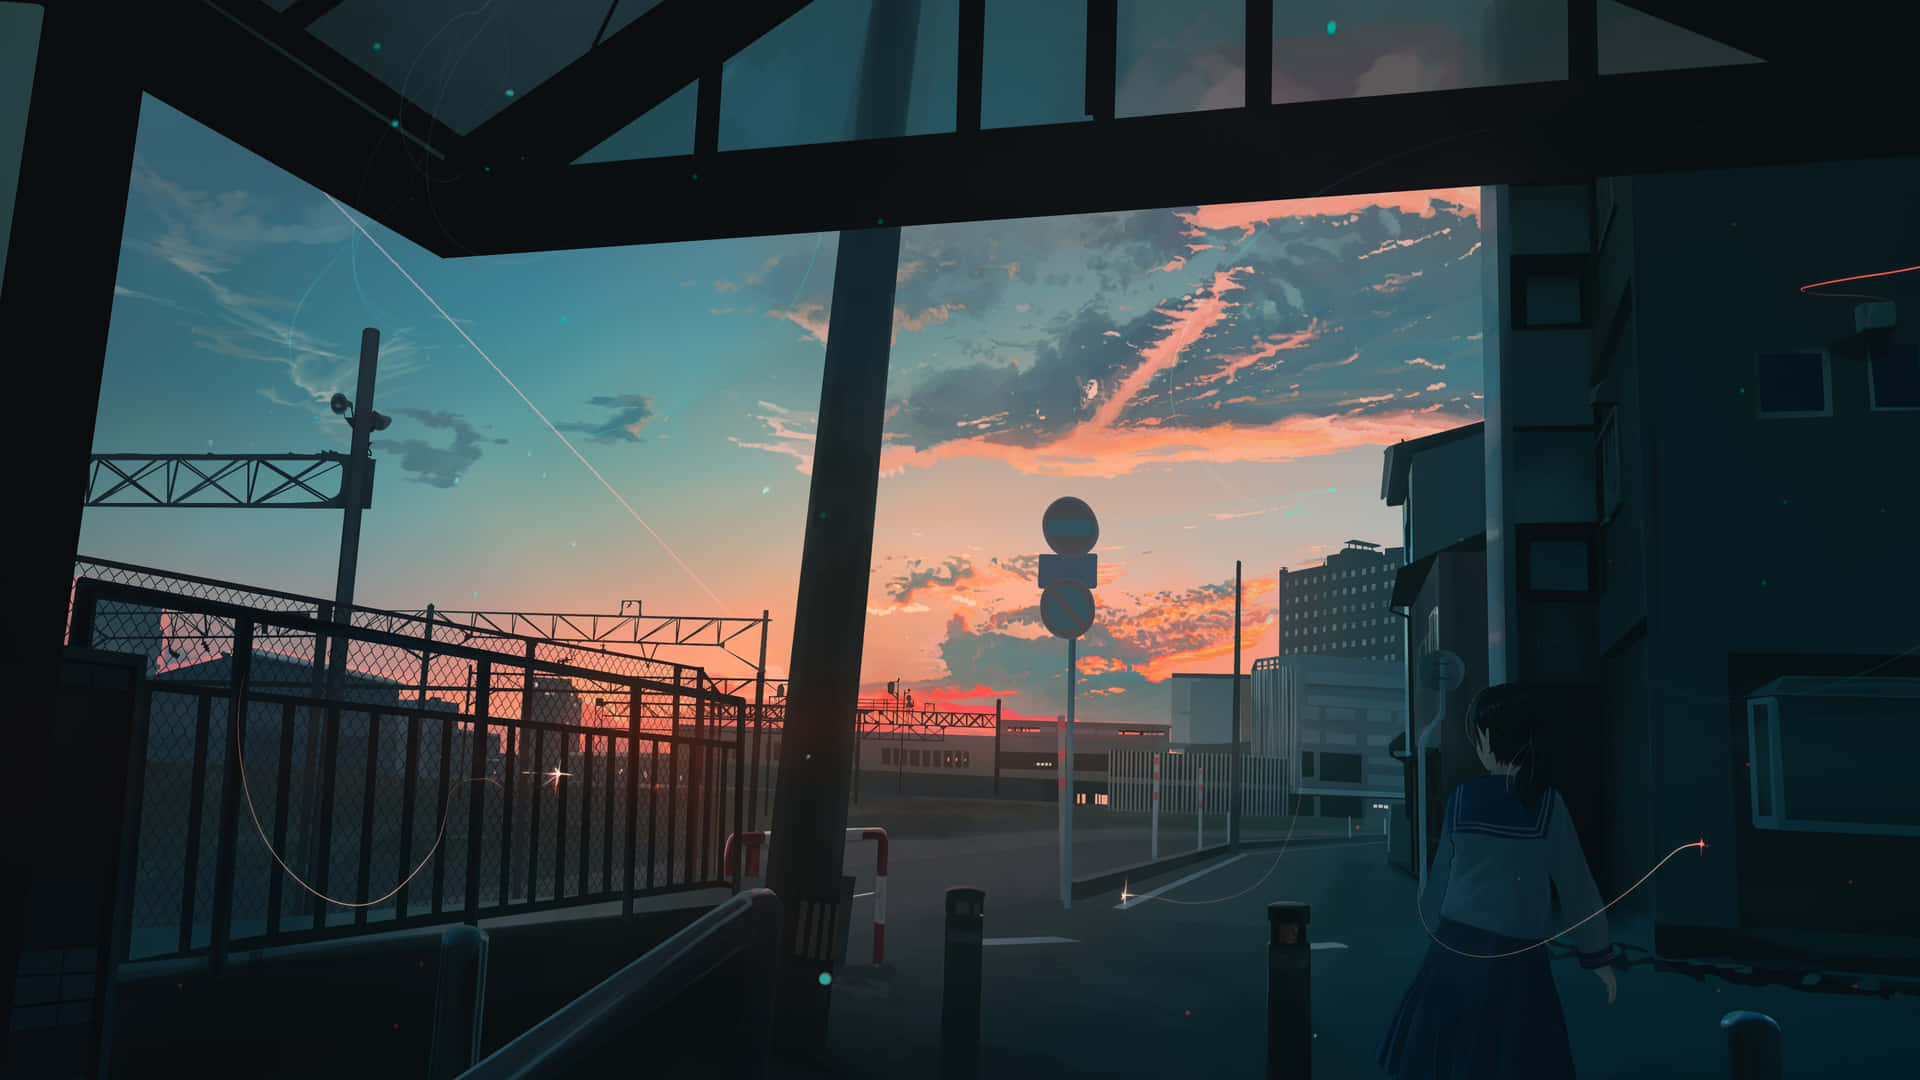 100+] Aesthetic Anime City Background s 